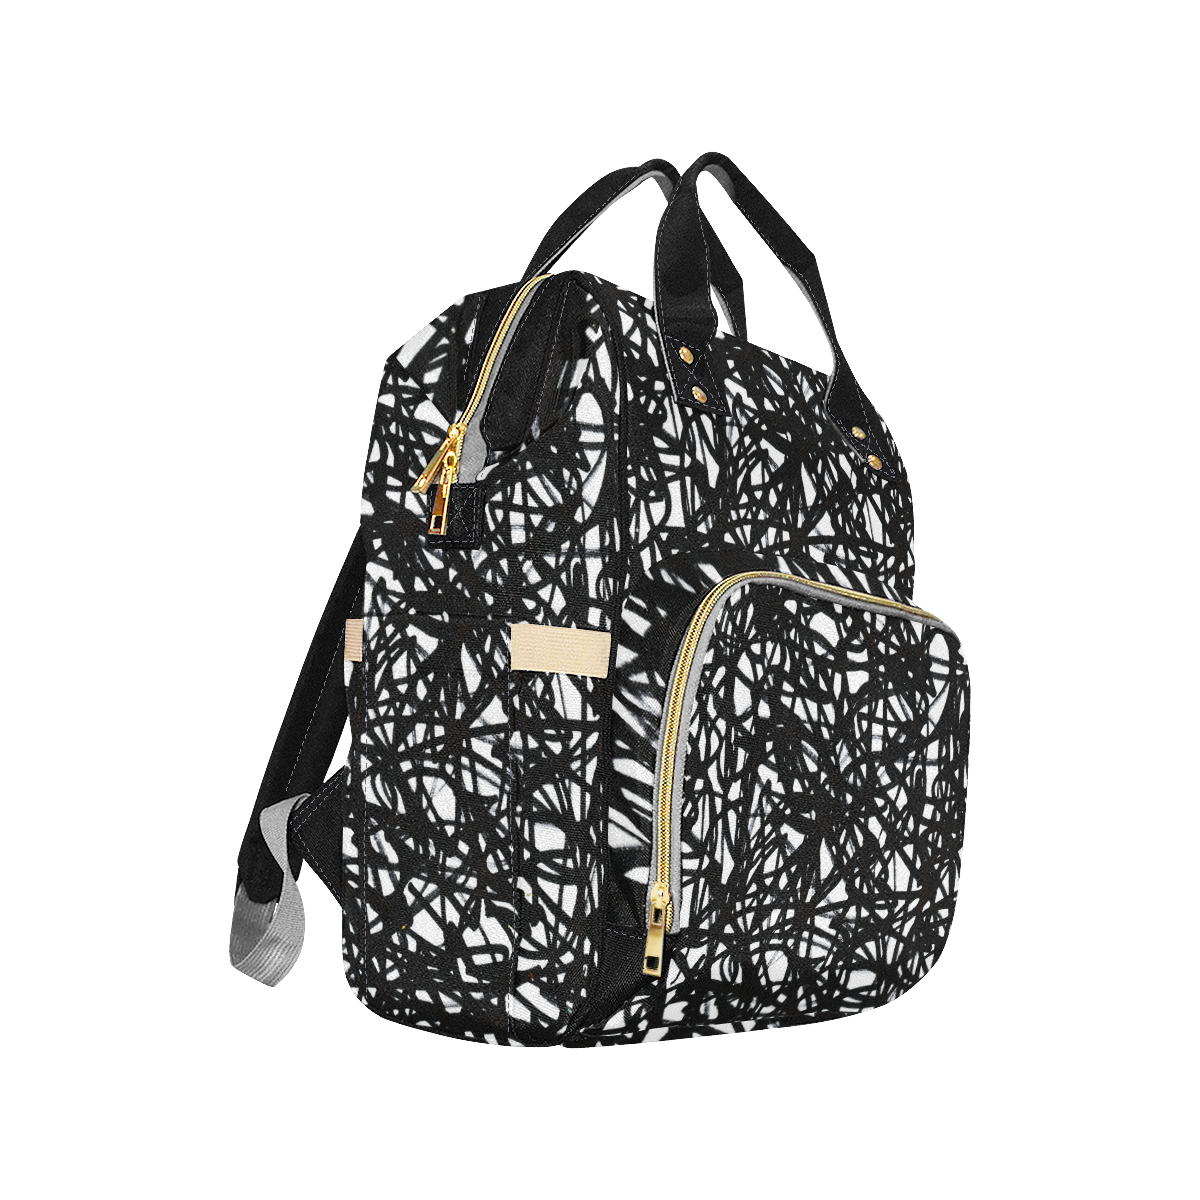 Black And White Abstract Art Design Multi-Function Diaper Backpack/Diaper Bag (Model 1688)